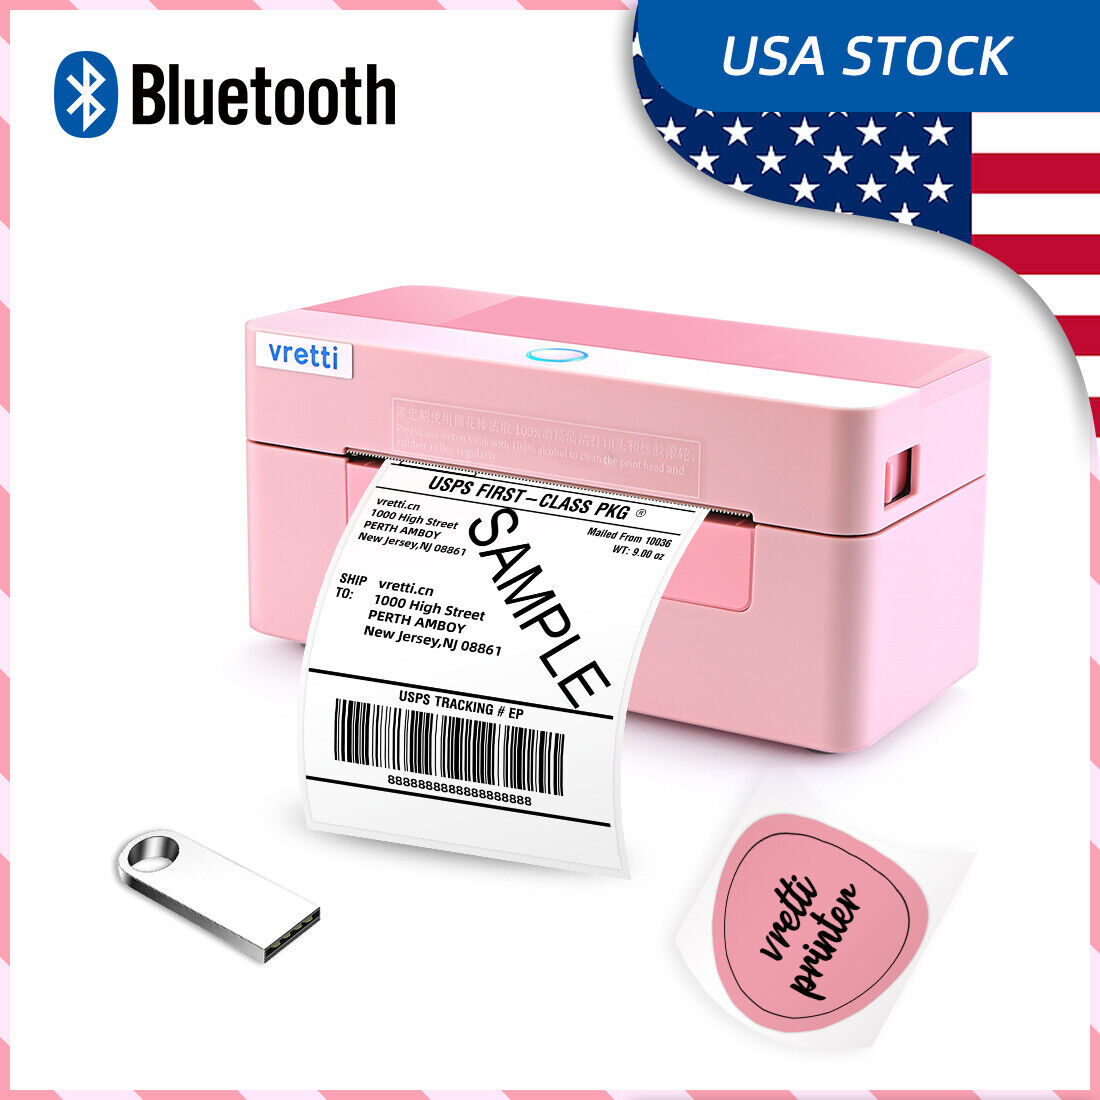 VRETTI Bluetooth Thermal Shipping Label Printer UPS,USPS,eBay